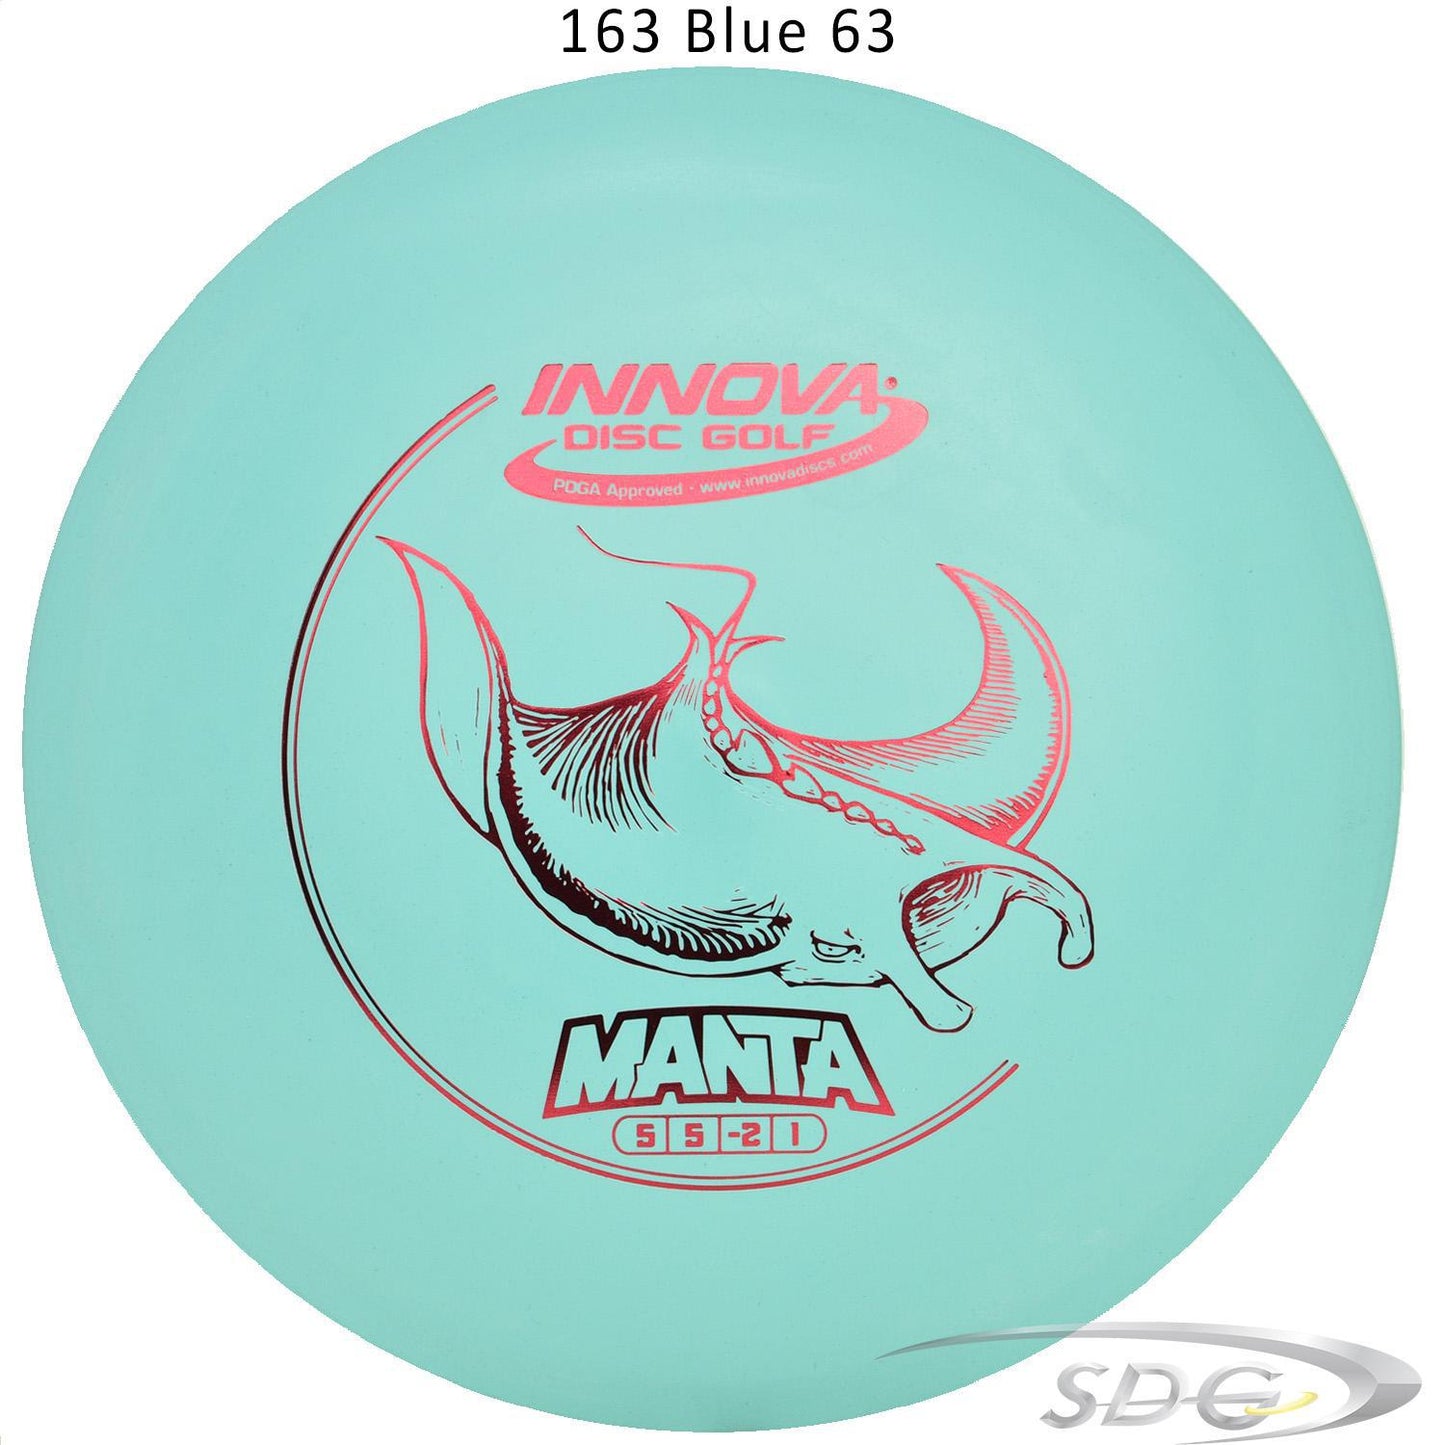 innova-dx-manta-disc-golf-mid-mange 163 Blue 63 